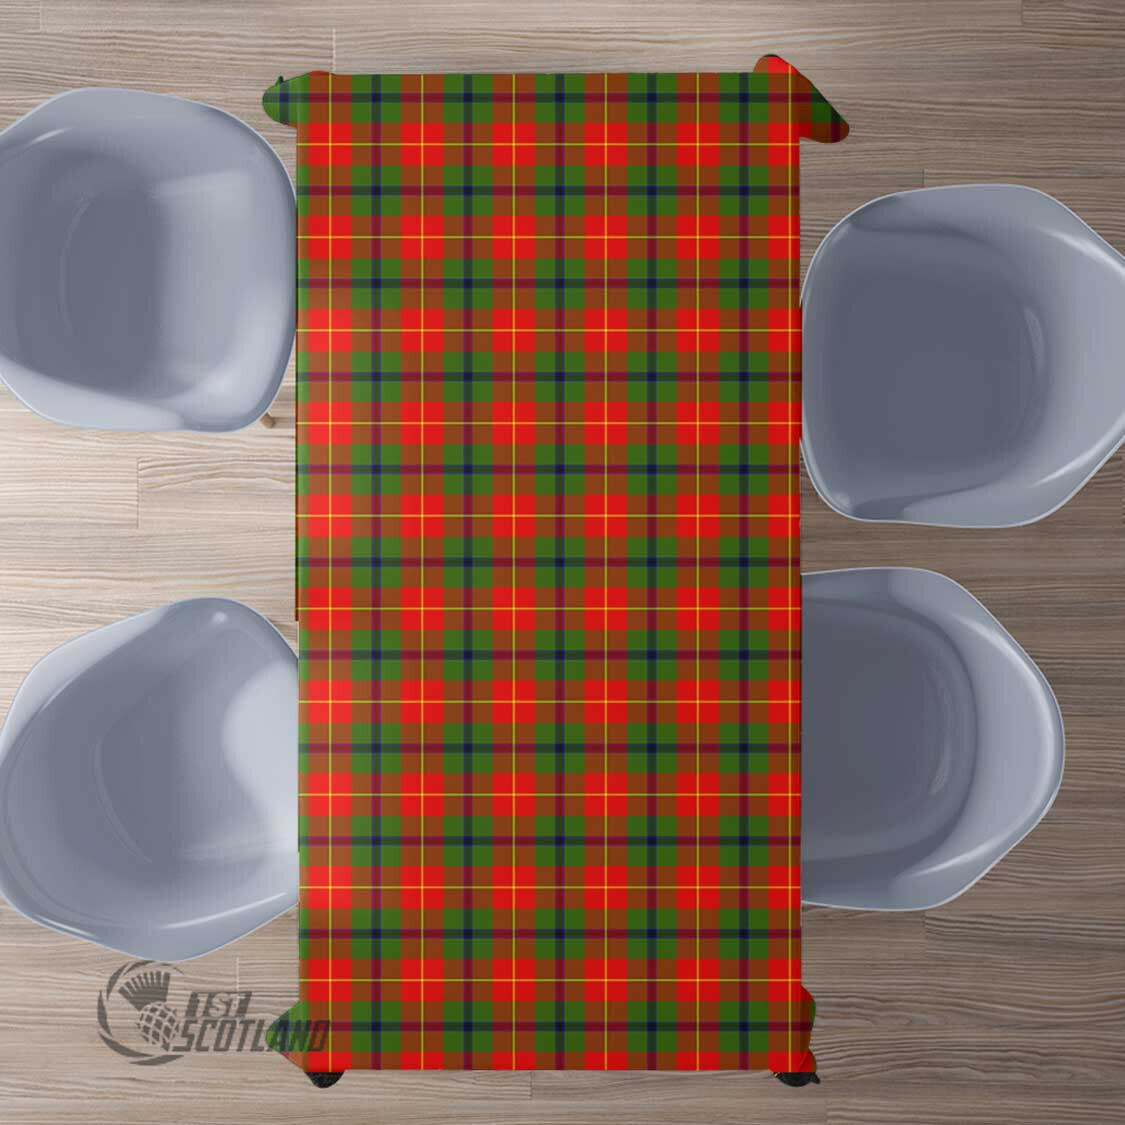 Scottish Turnbull Dress Tartan Rectangle Tablecloth Full Plaid